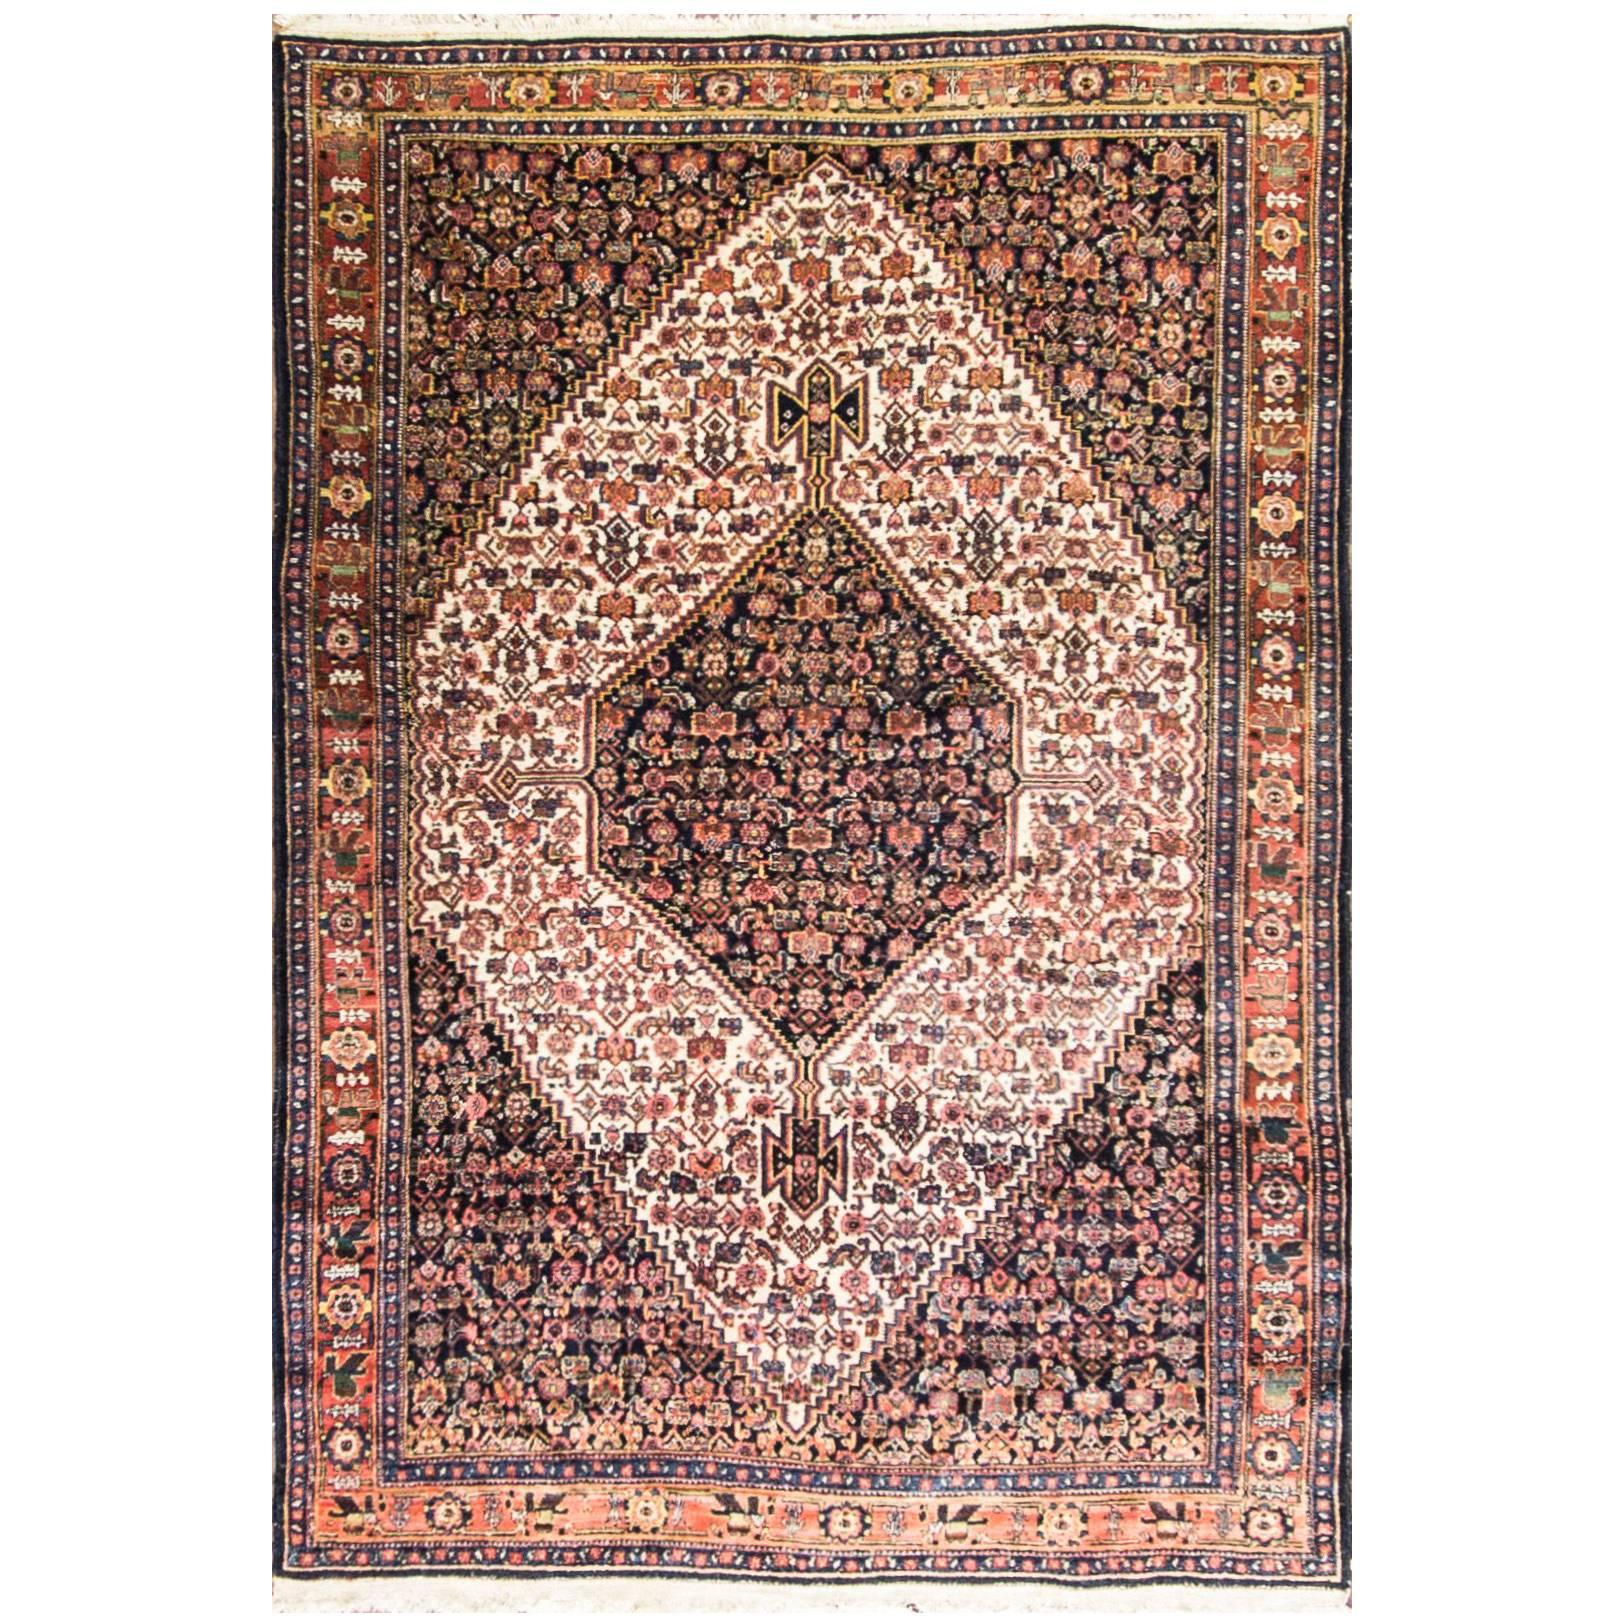 Antique Persian Senneh Rug, 4'6" x 5'10".  